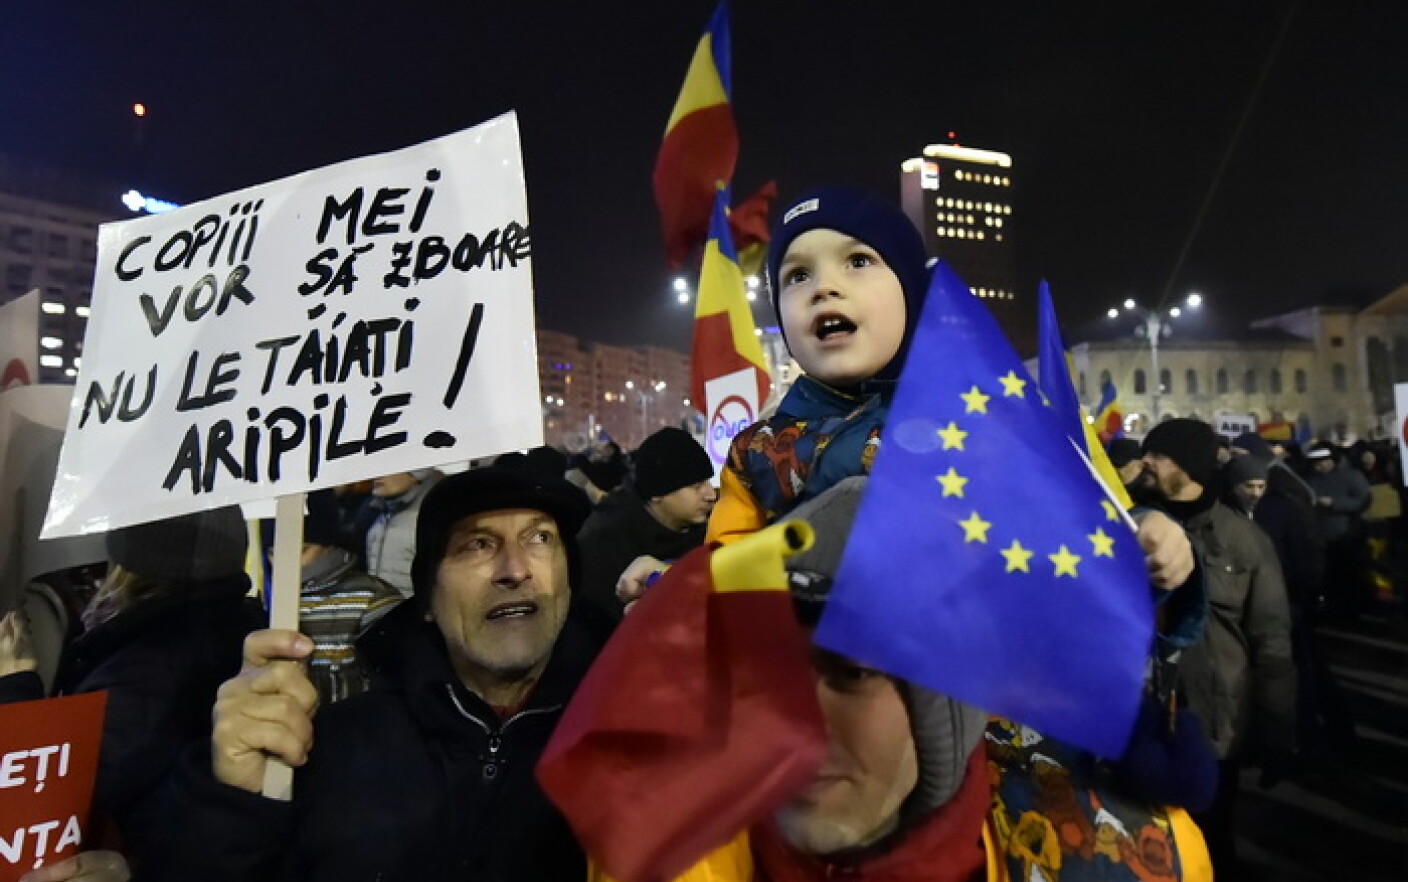 roof Joint swallow 100.000 de oameni au manifestat pasnic, vineri, in Piata Victoriei: "PSD a  transformat Romania intr-o tara de refugiati" - Stirileprotv.ro